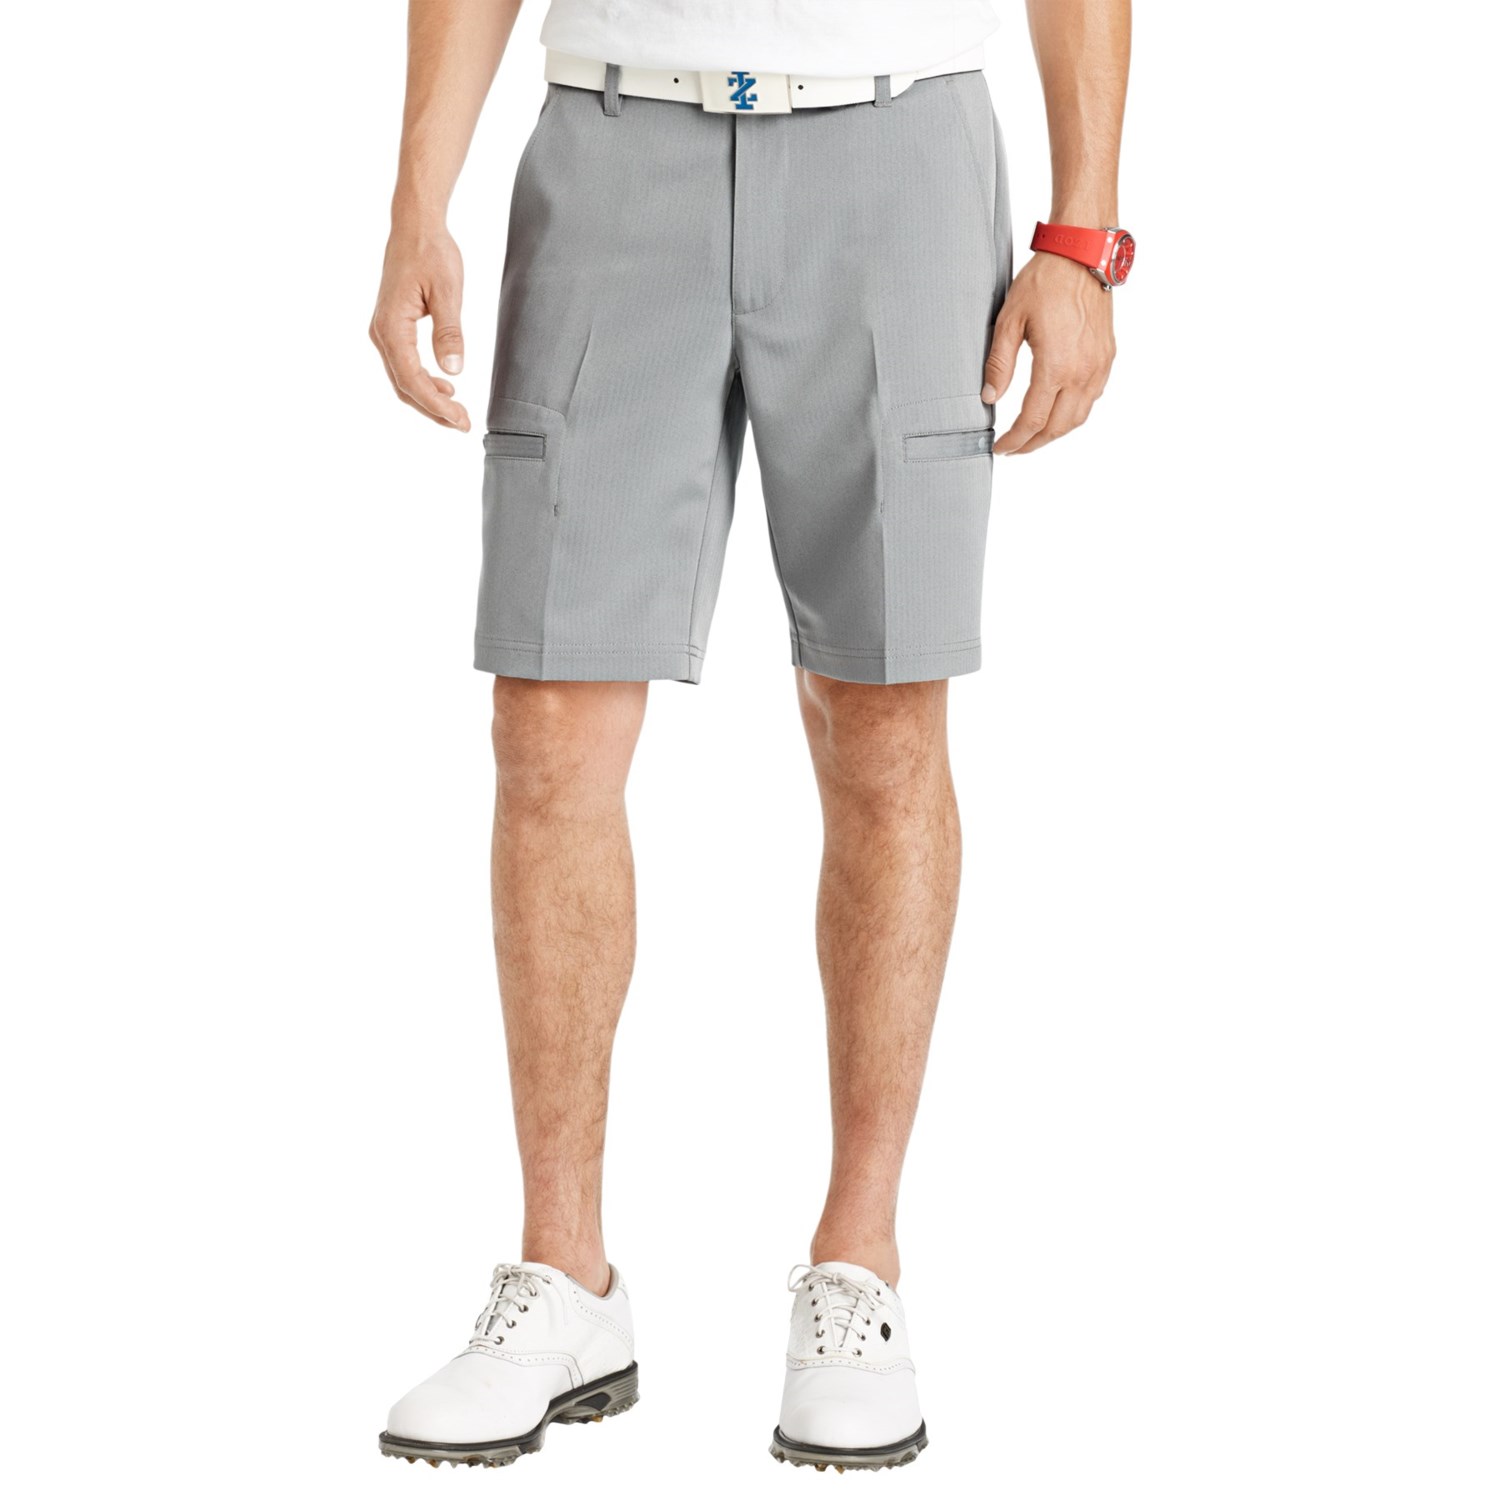 IZOD Herringbone Cargo Golf Shorts (For Men) - Save 61%